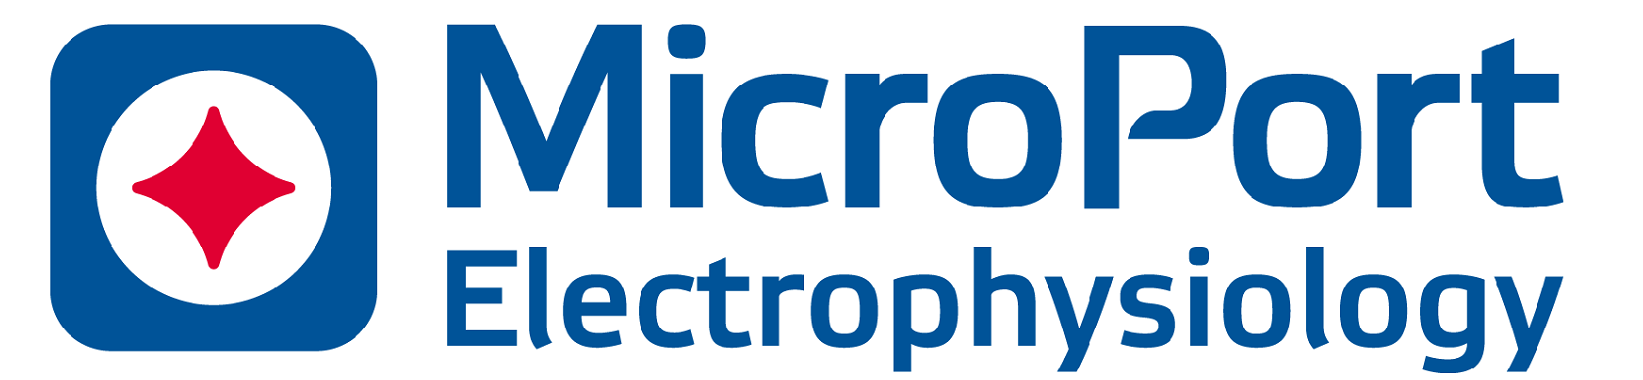 microport electrofisiologia